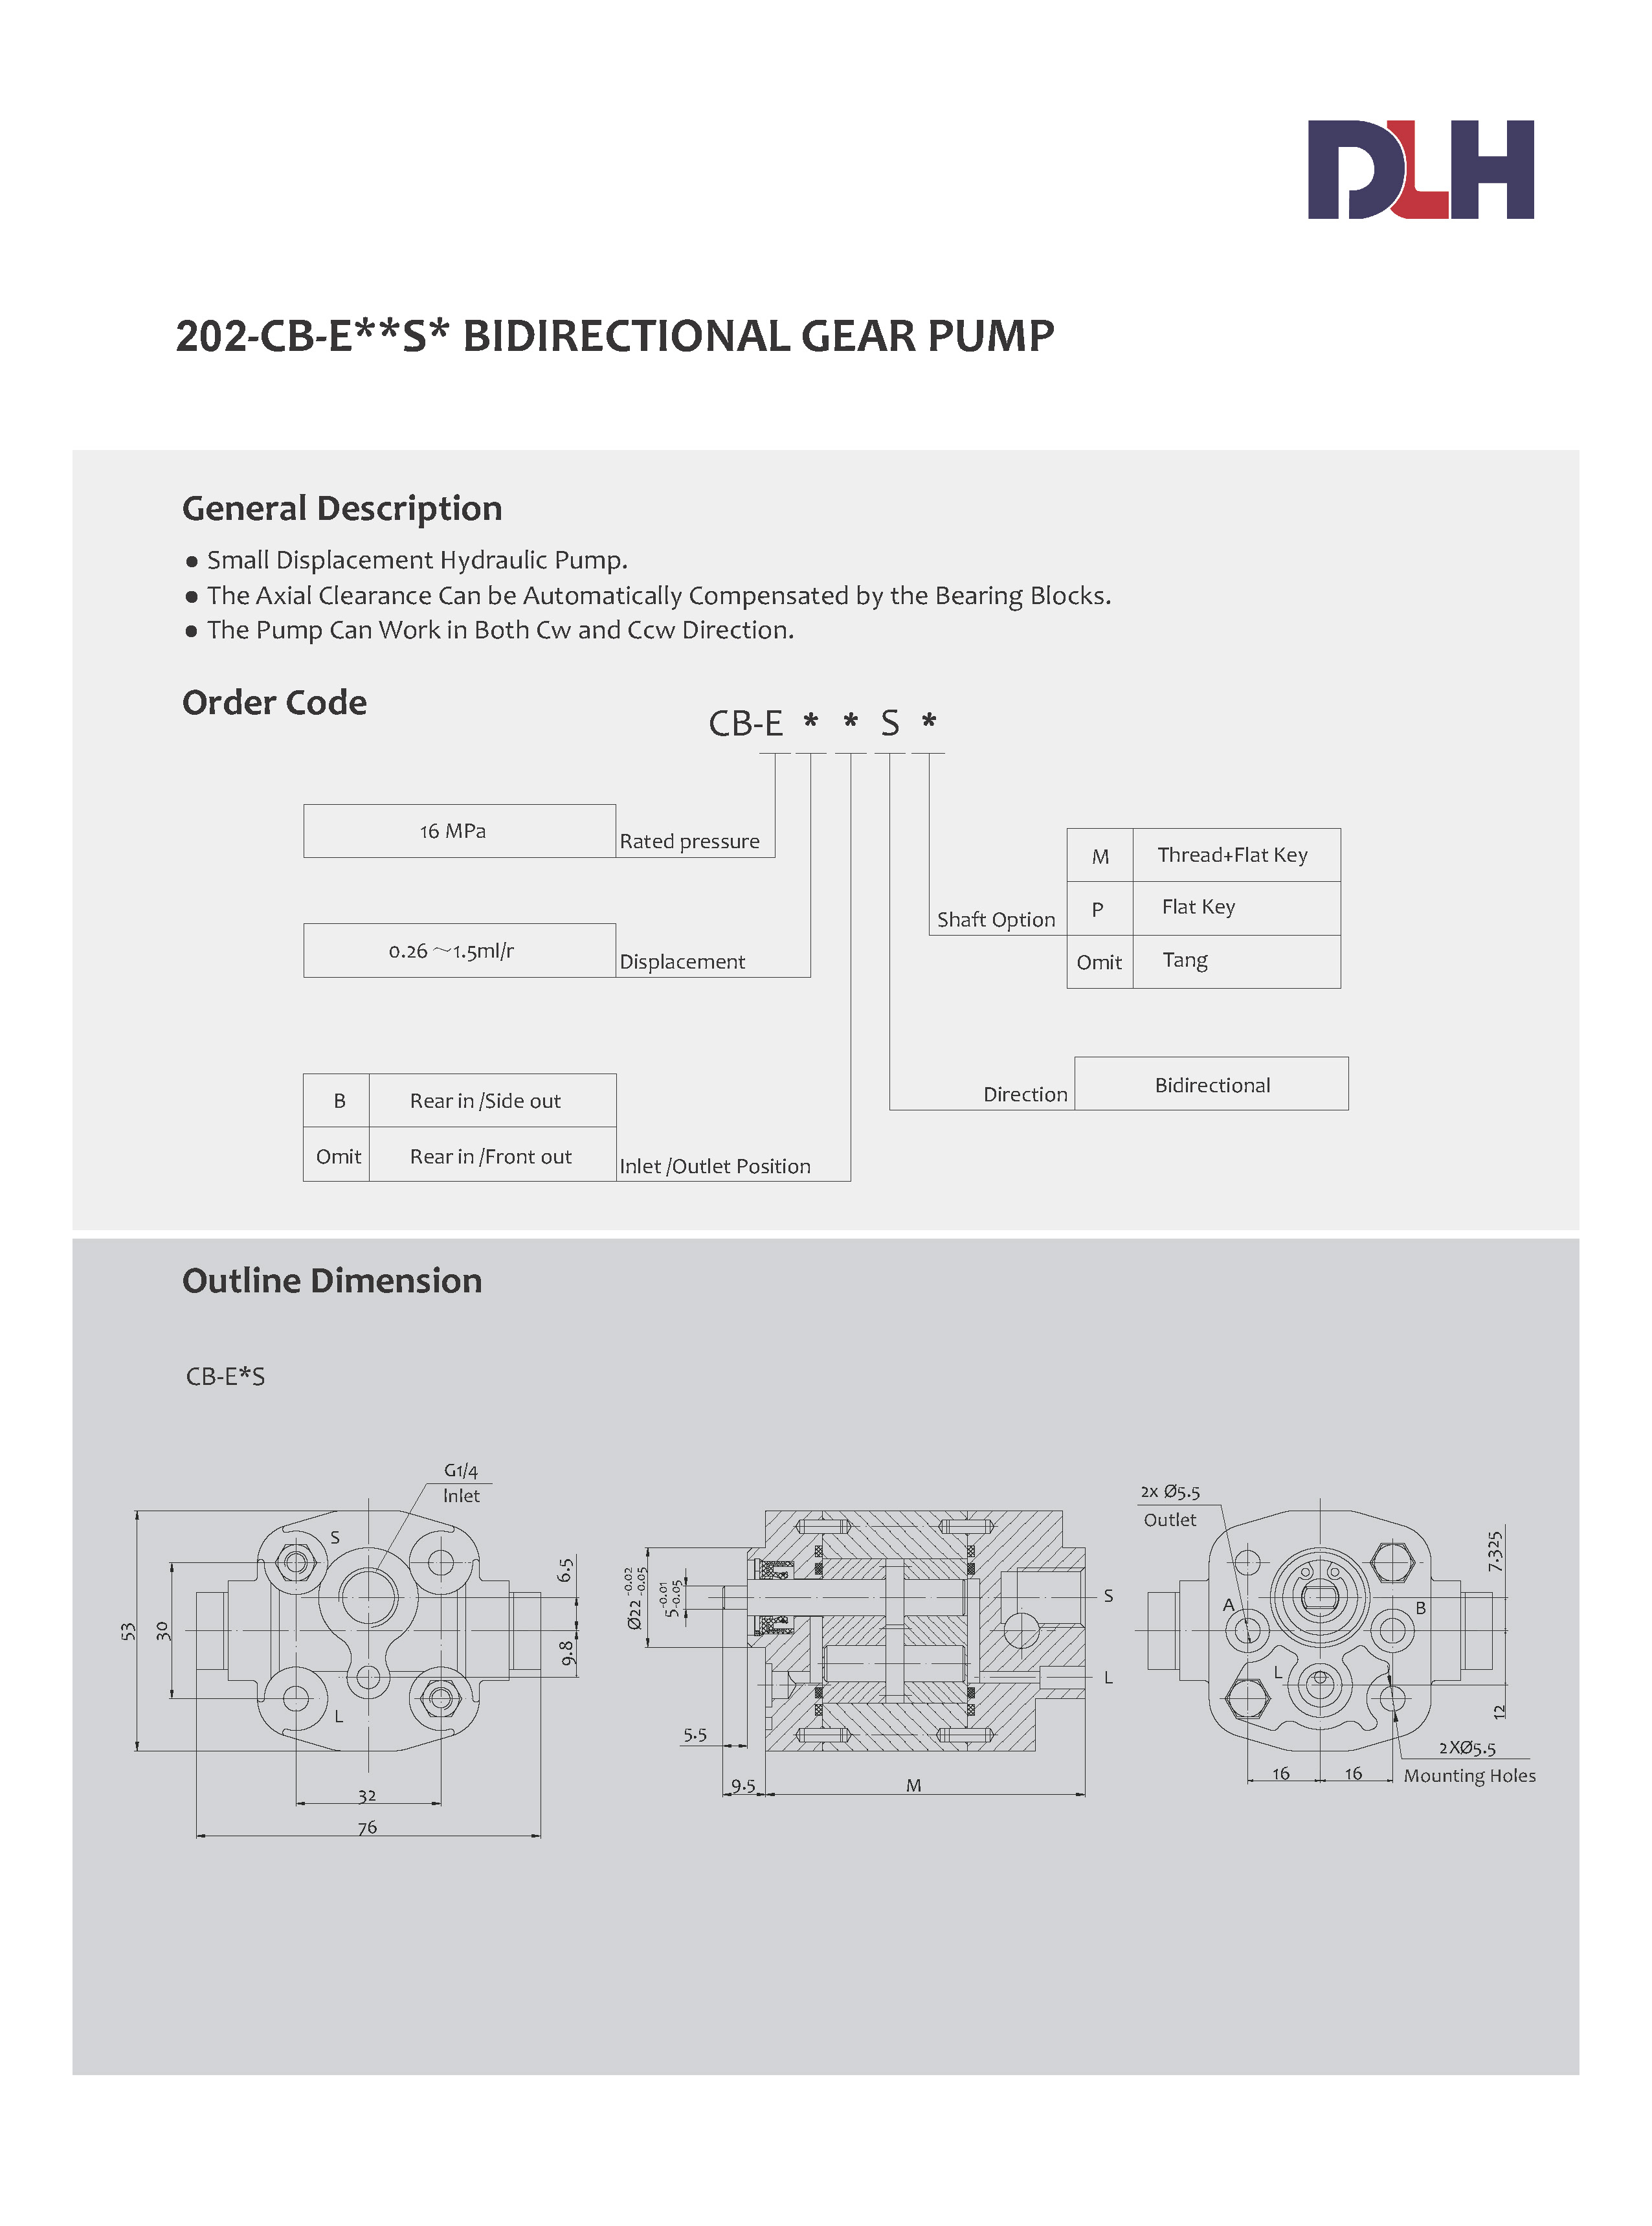 CB-E Bi- Directional Gear Pumps